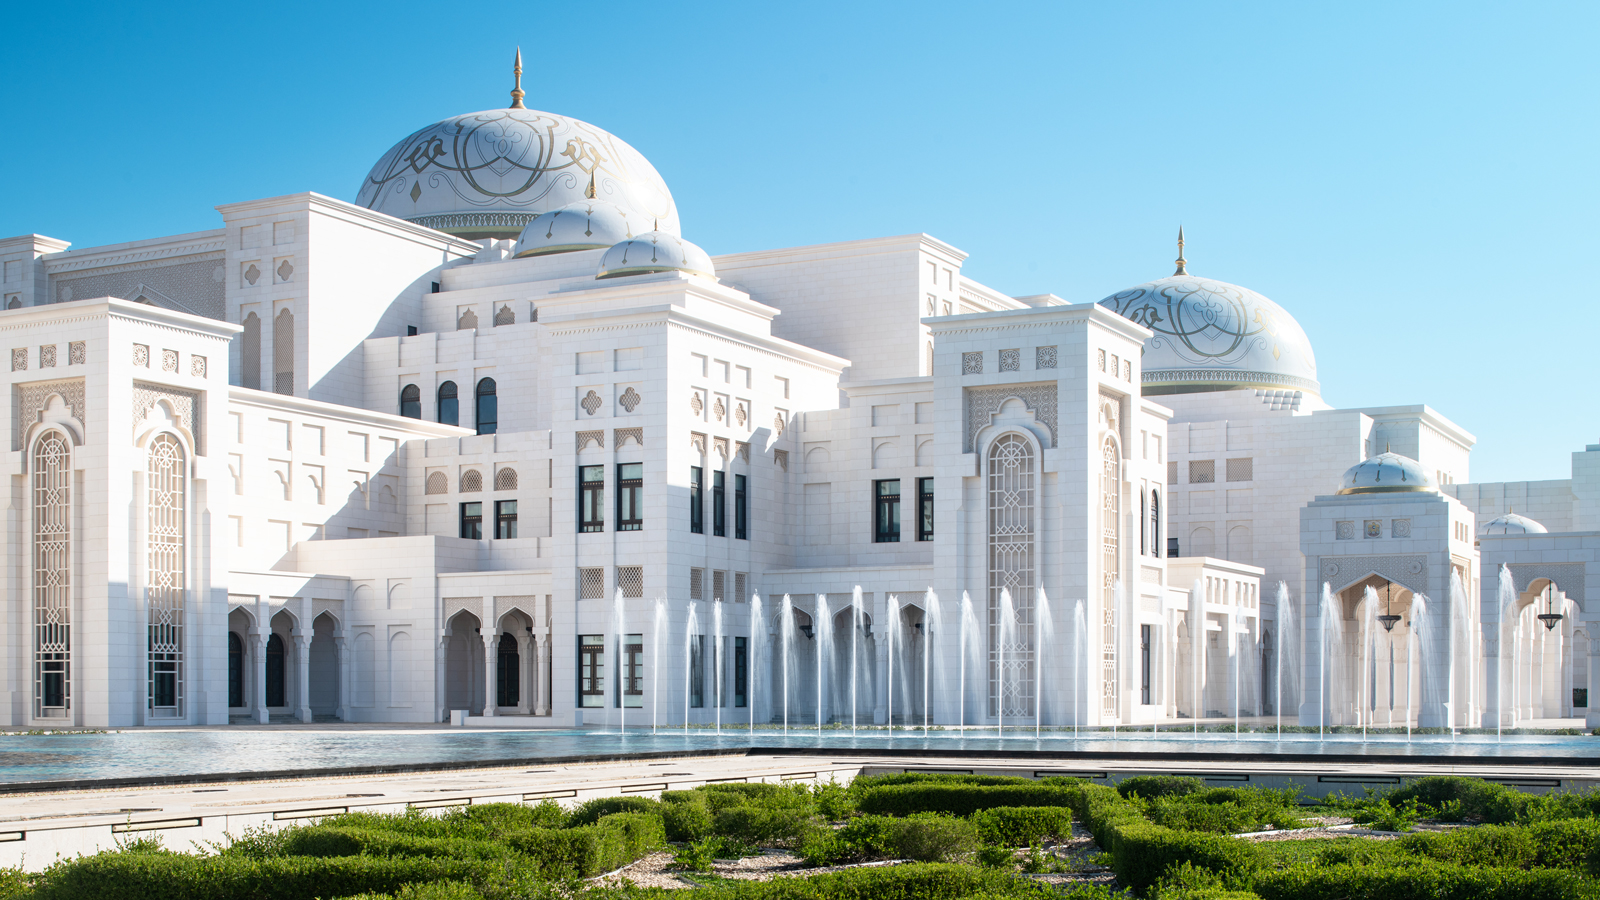 Qasr Al Watan is The Landmark of Abu Dhabi